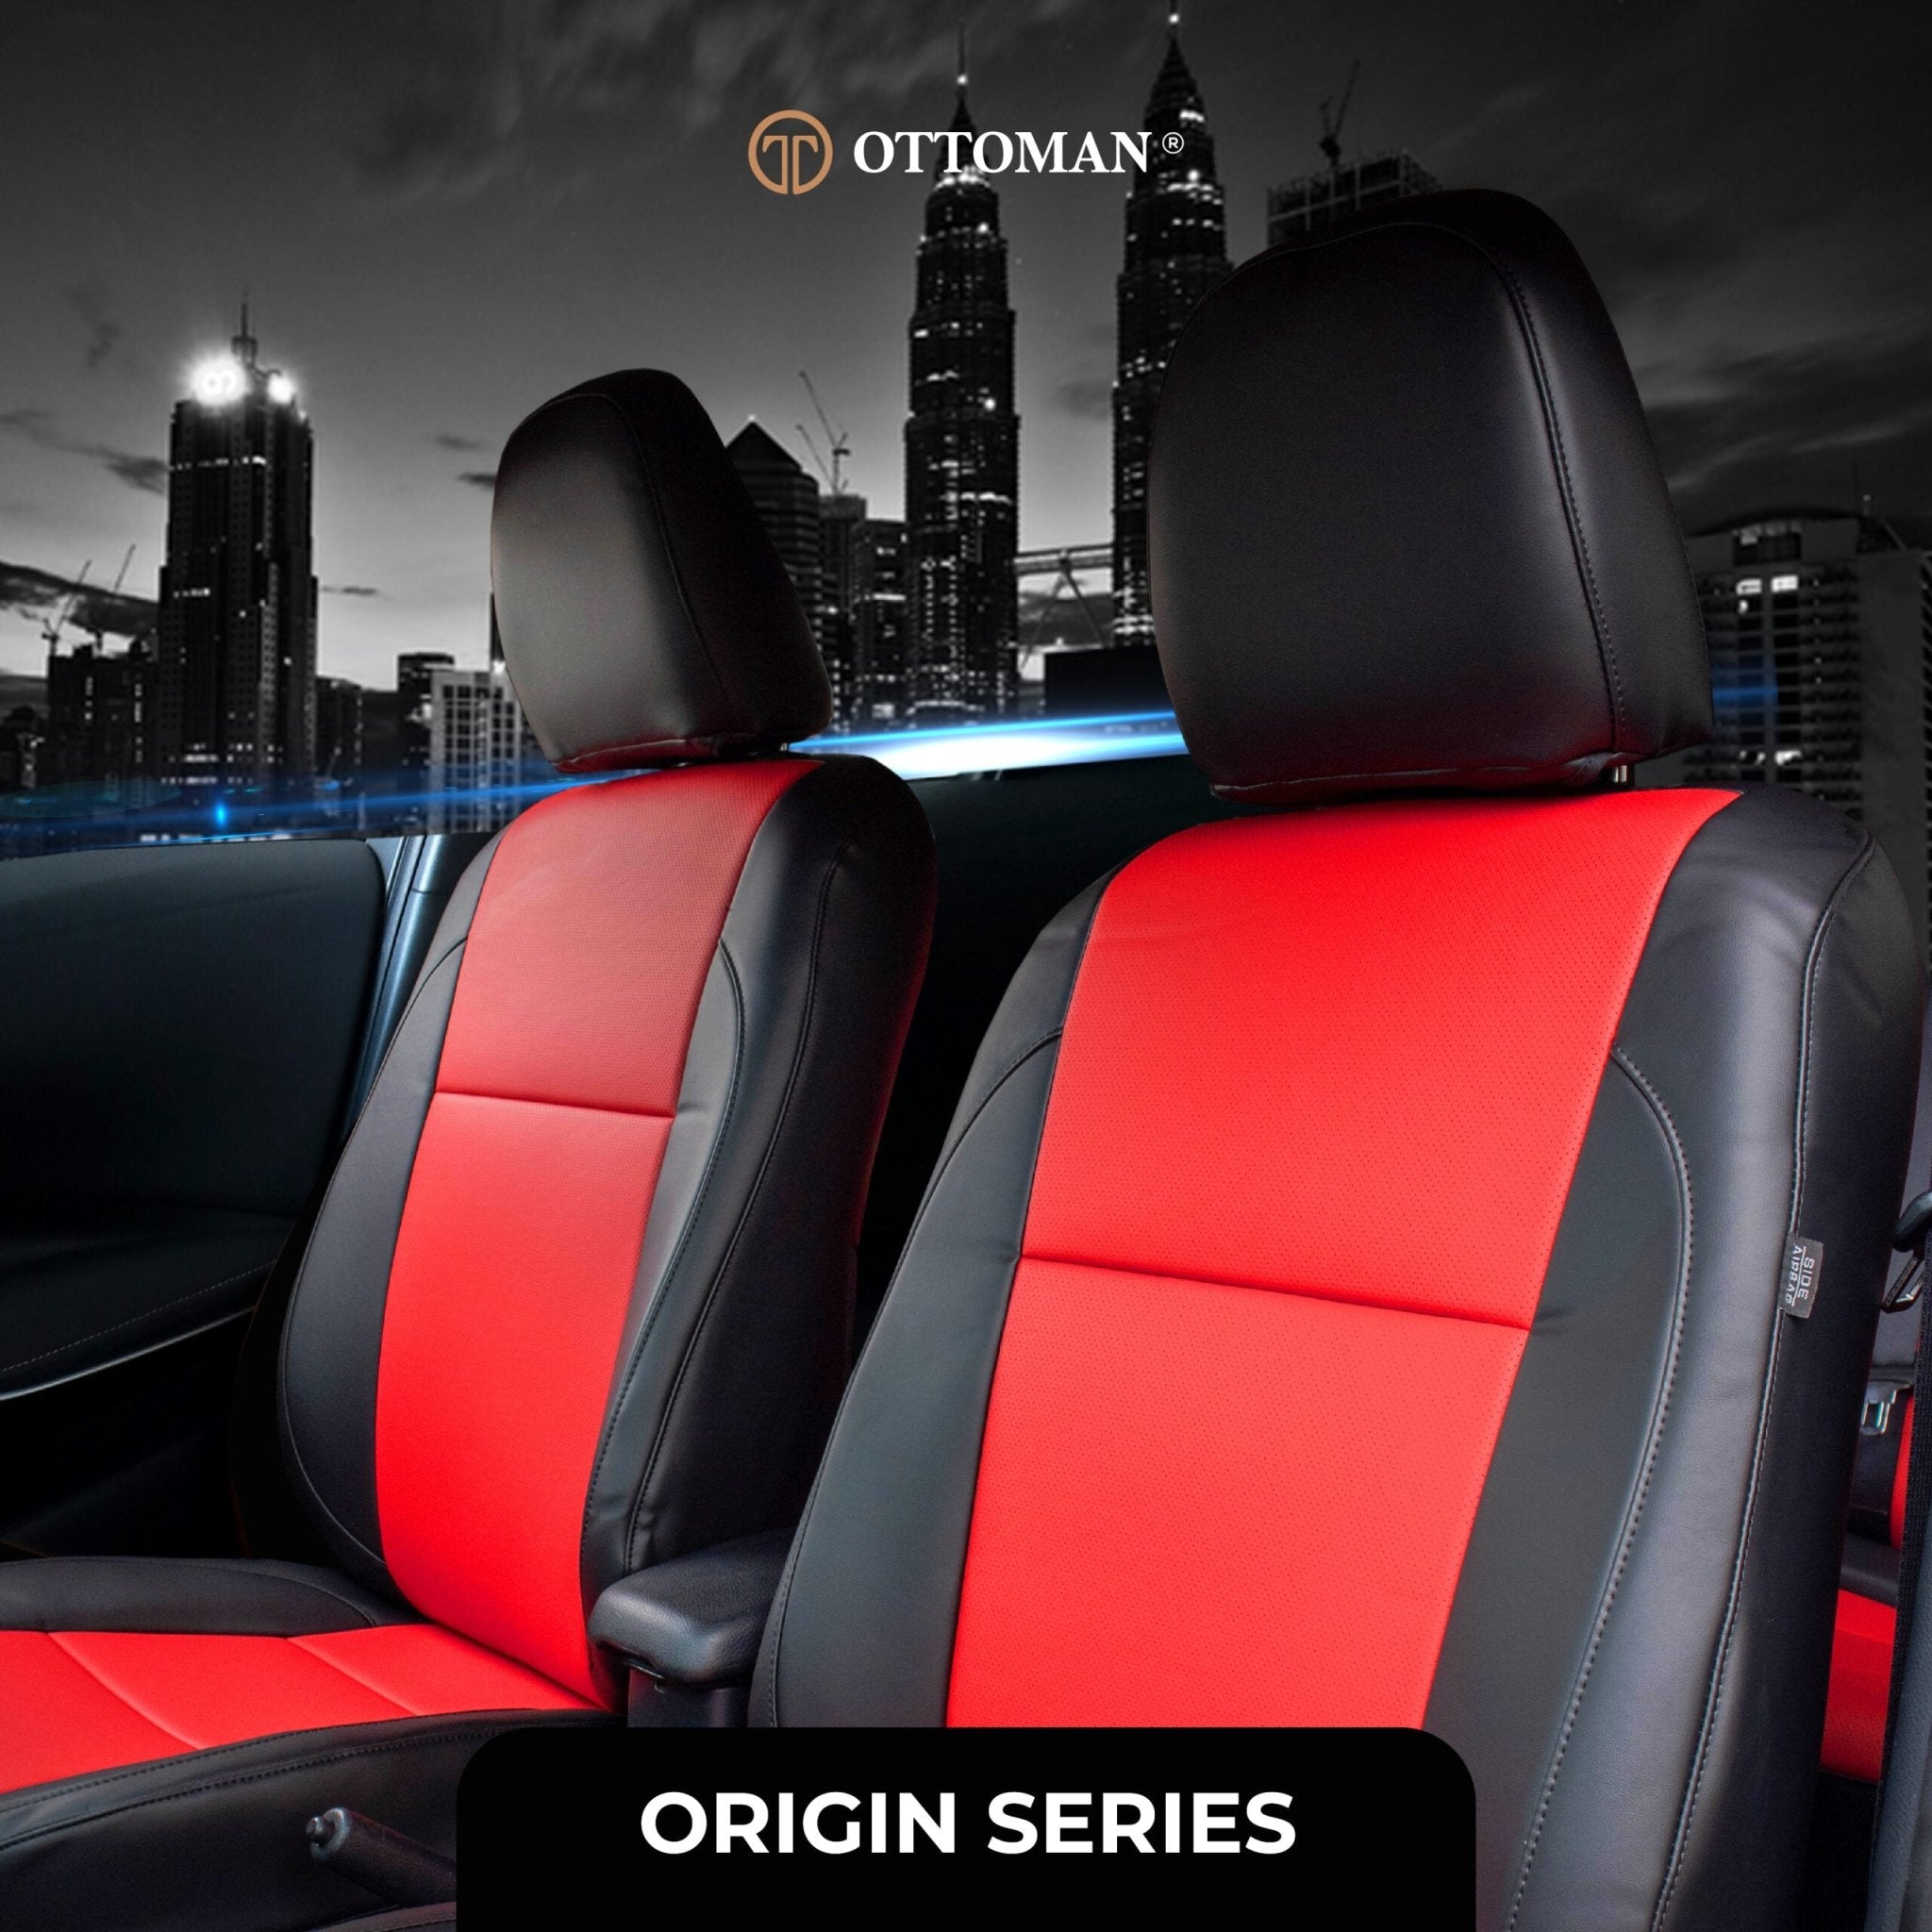 Toyota Avanza (2012-2018) Ottoman Seat Cover Seat Cover in Klang Selangor, Penang, Johor Bahru - Ottoman Car Mats